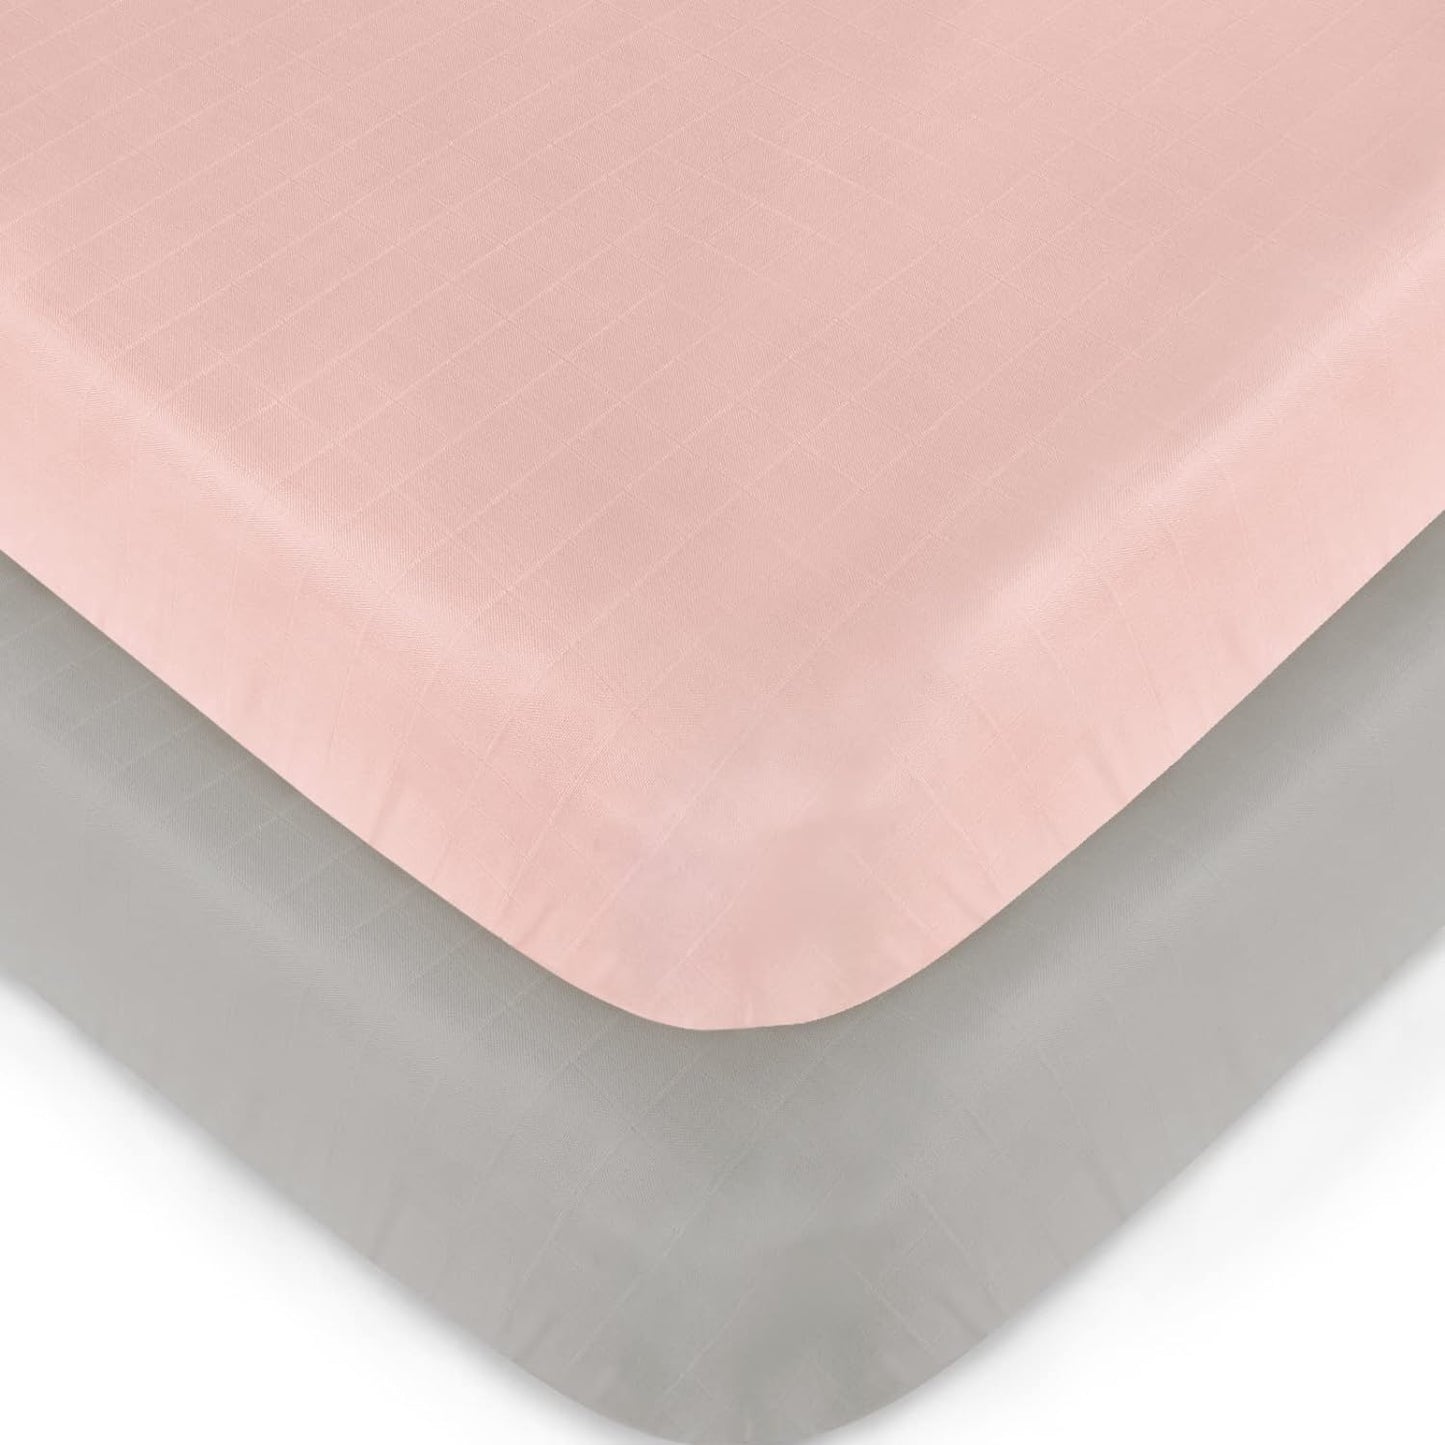 Crib Sheets - 2 Pack, Muslin ( for Standard Crib 52"x28" ), Pink& Gray